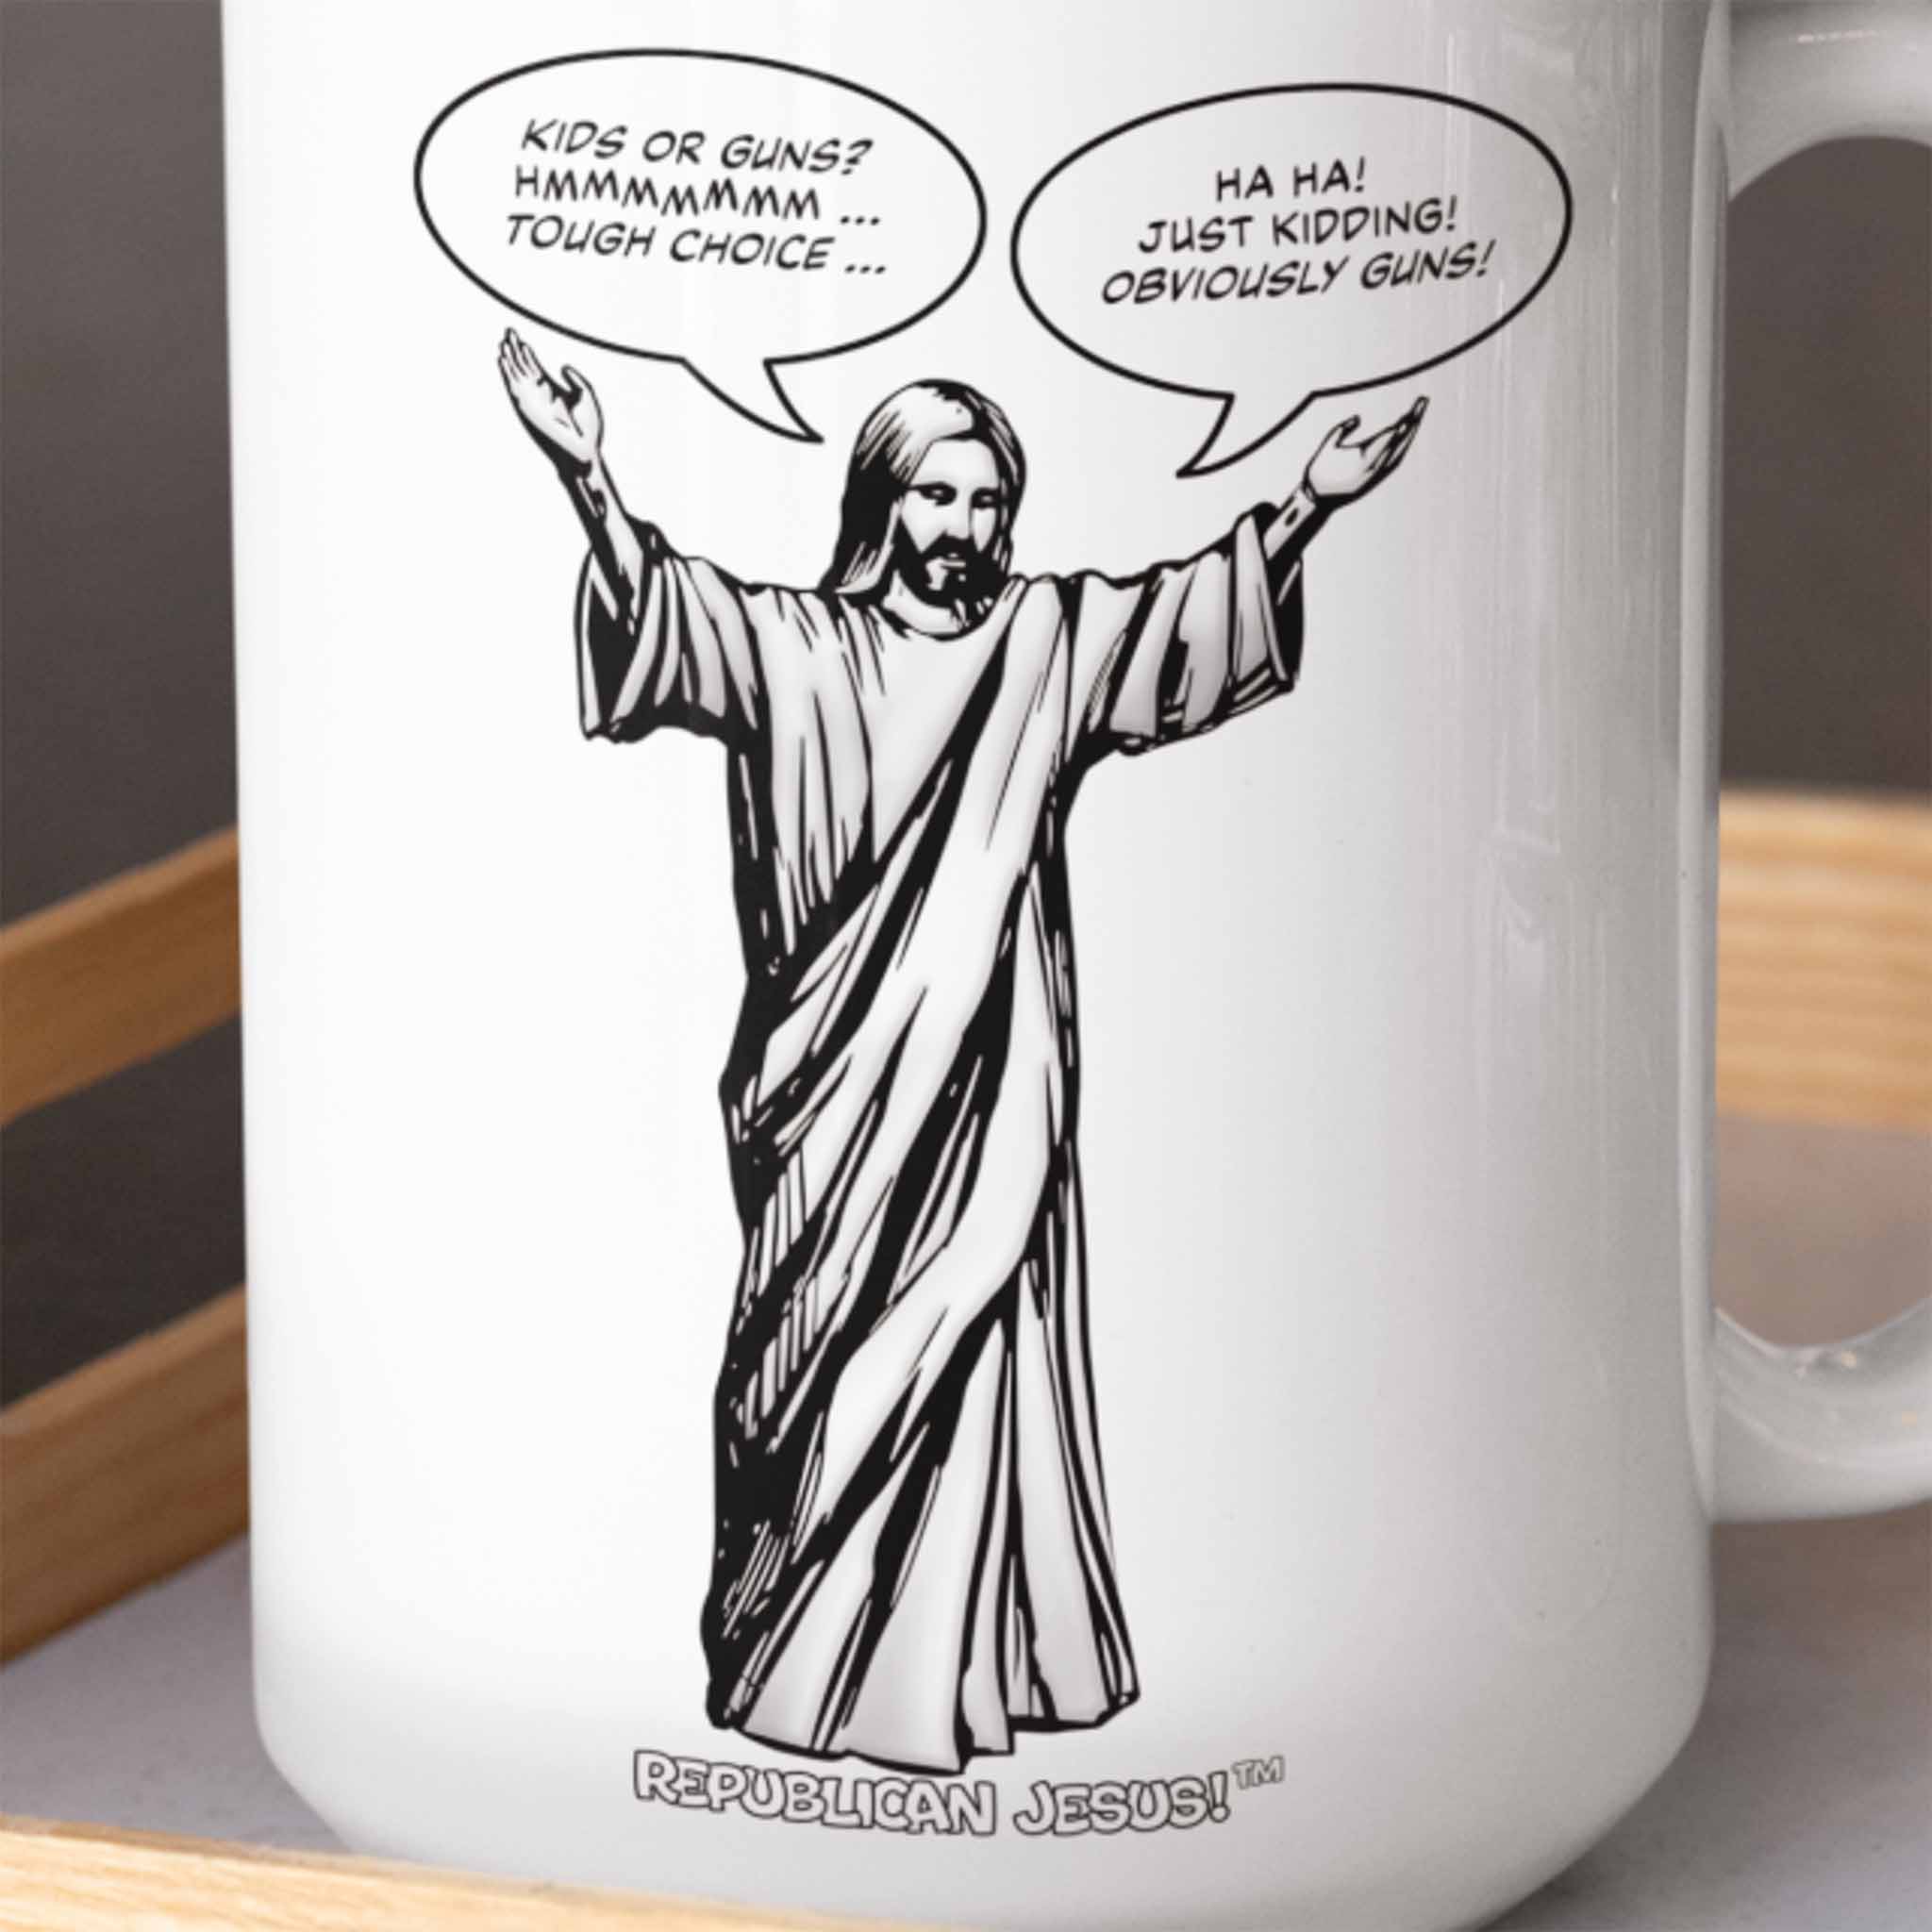 Republican Jesus!™ — "Kids vs Guns" 15oz mug